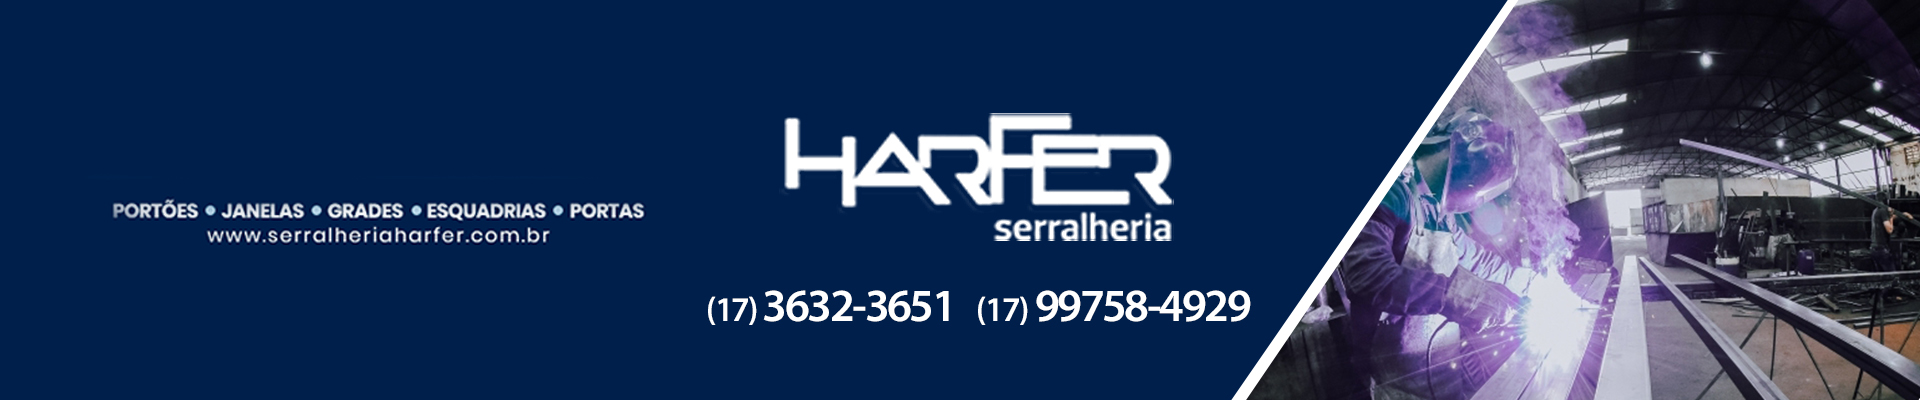 Harfer Serralheria